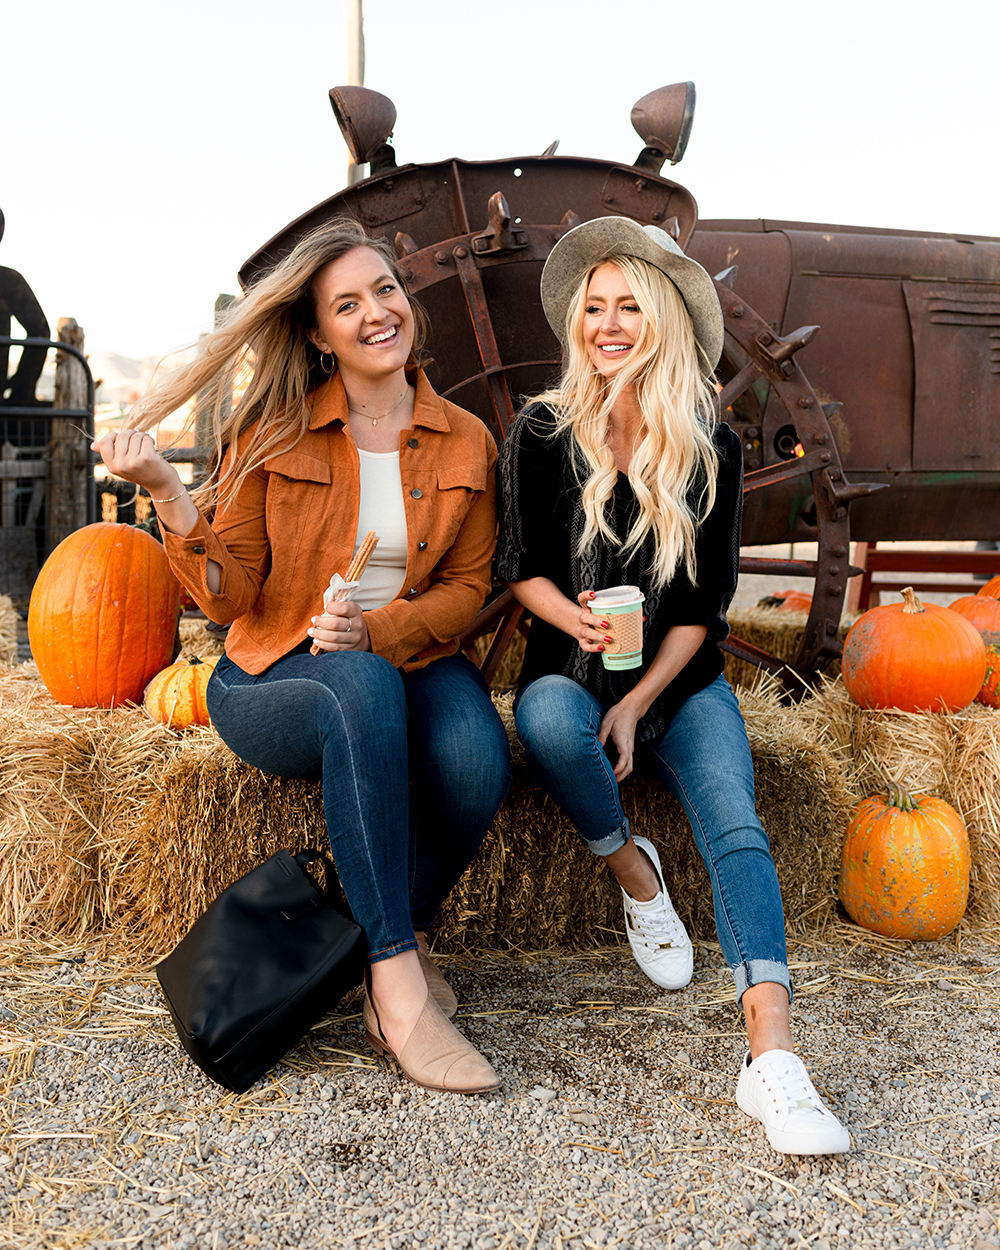 2 women in a pumpkin patch wearing modest clothing.